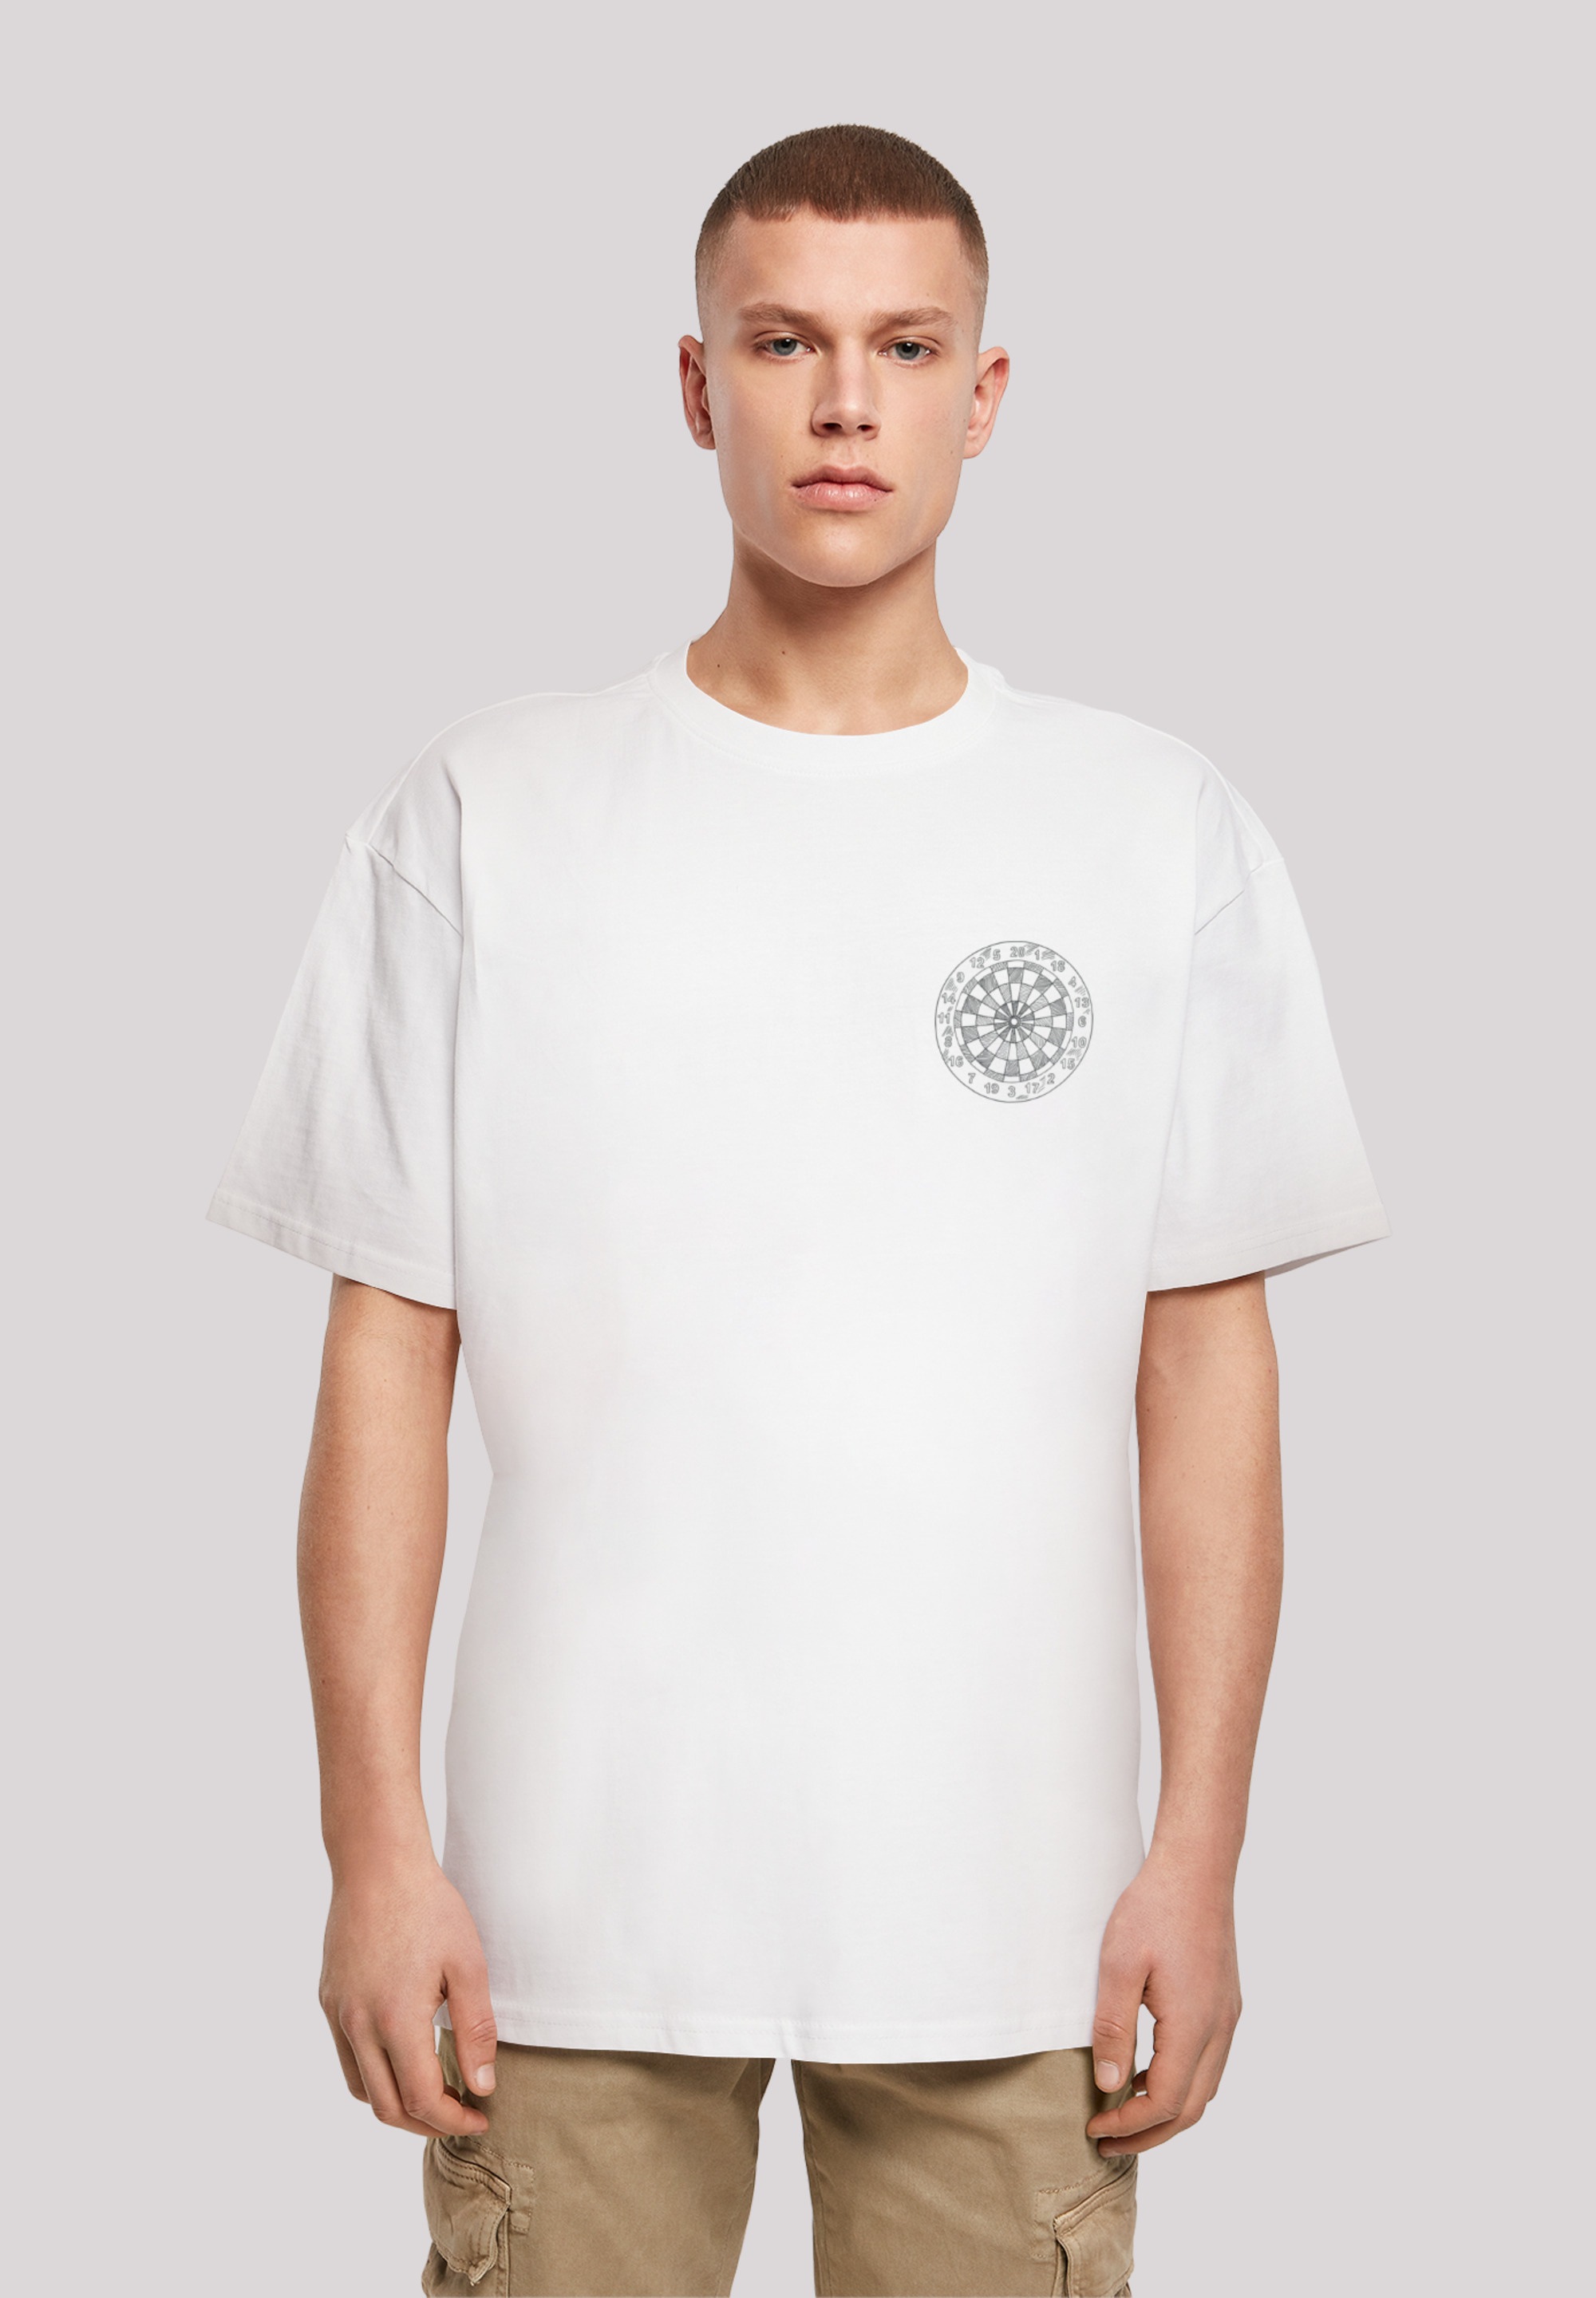 F4NT4STIC T-Shirt »Darts Board Dartscheibe«, Print